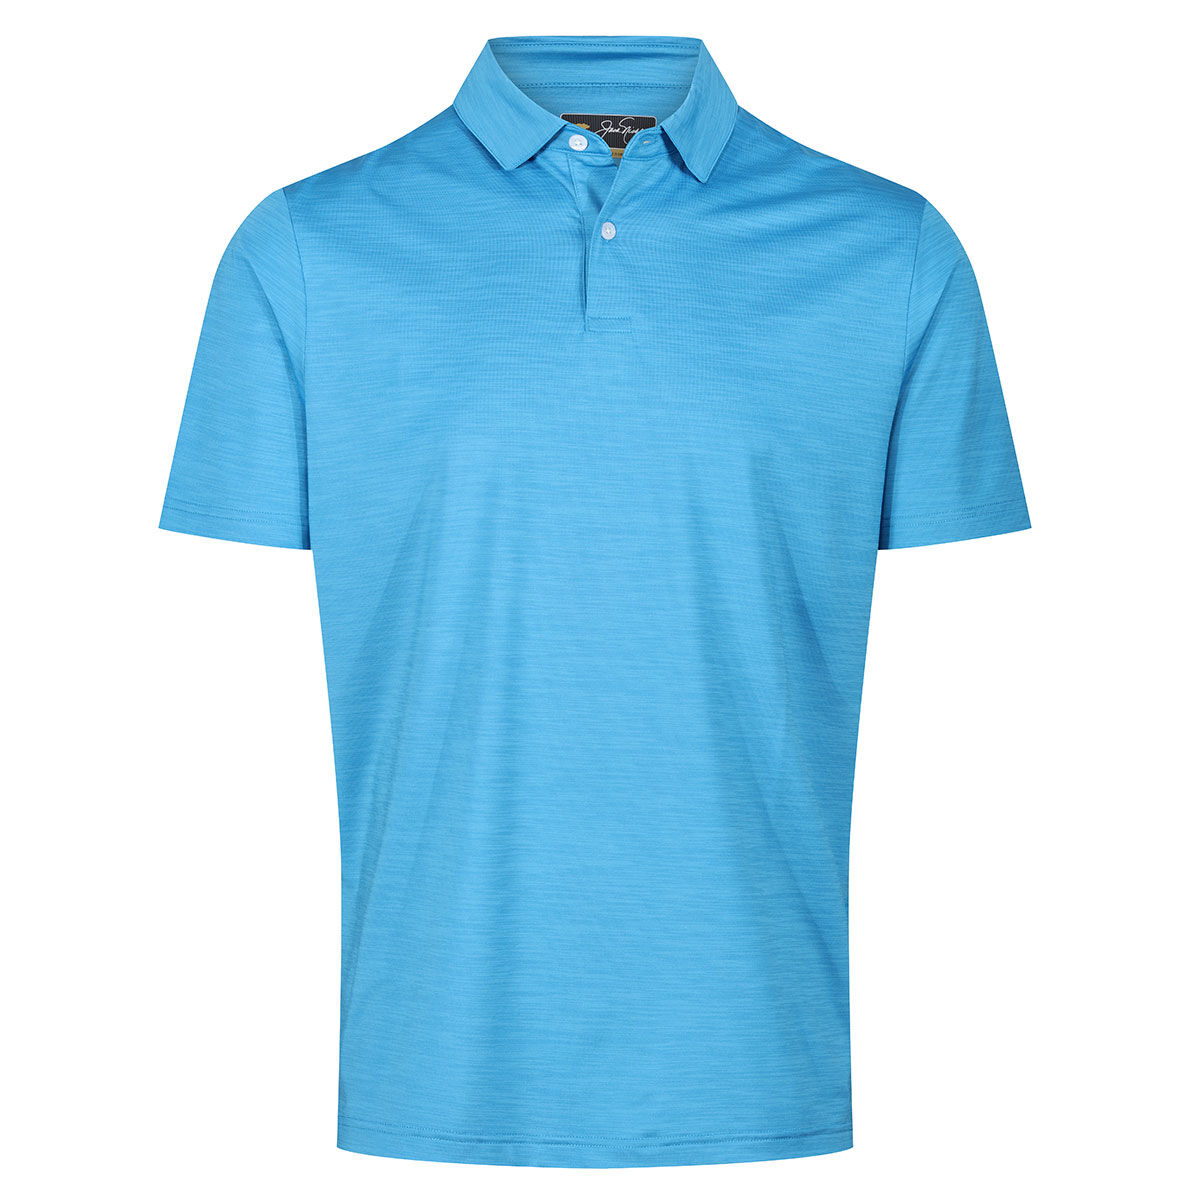 Jack Nicklaus Men’s Tonal Golf Polo Shirt, Mens, Light blue, Xxl | American Golf